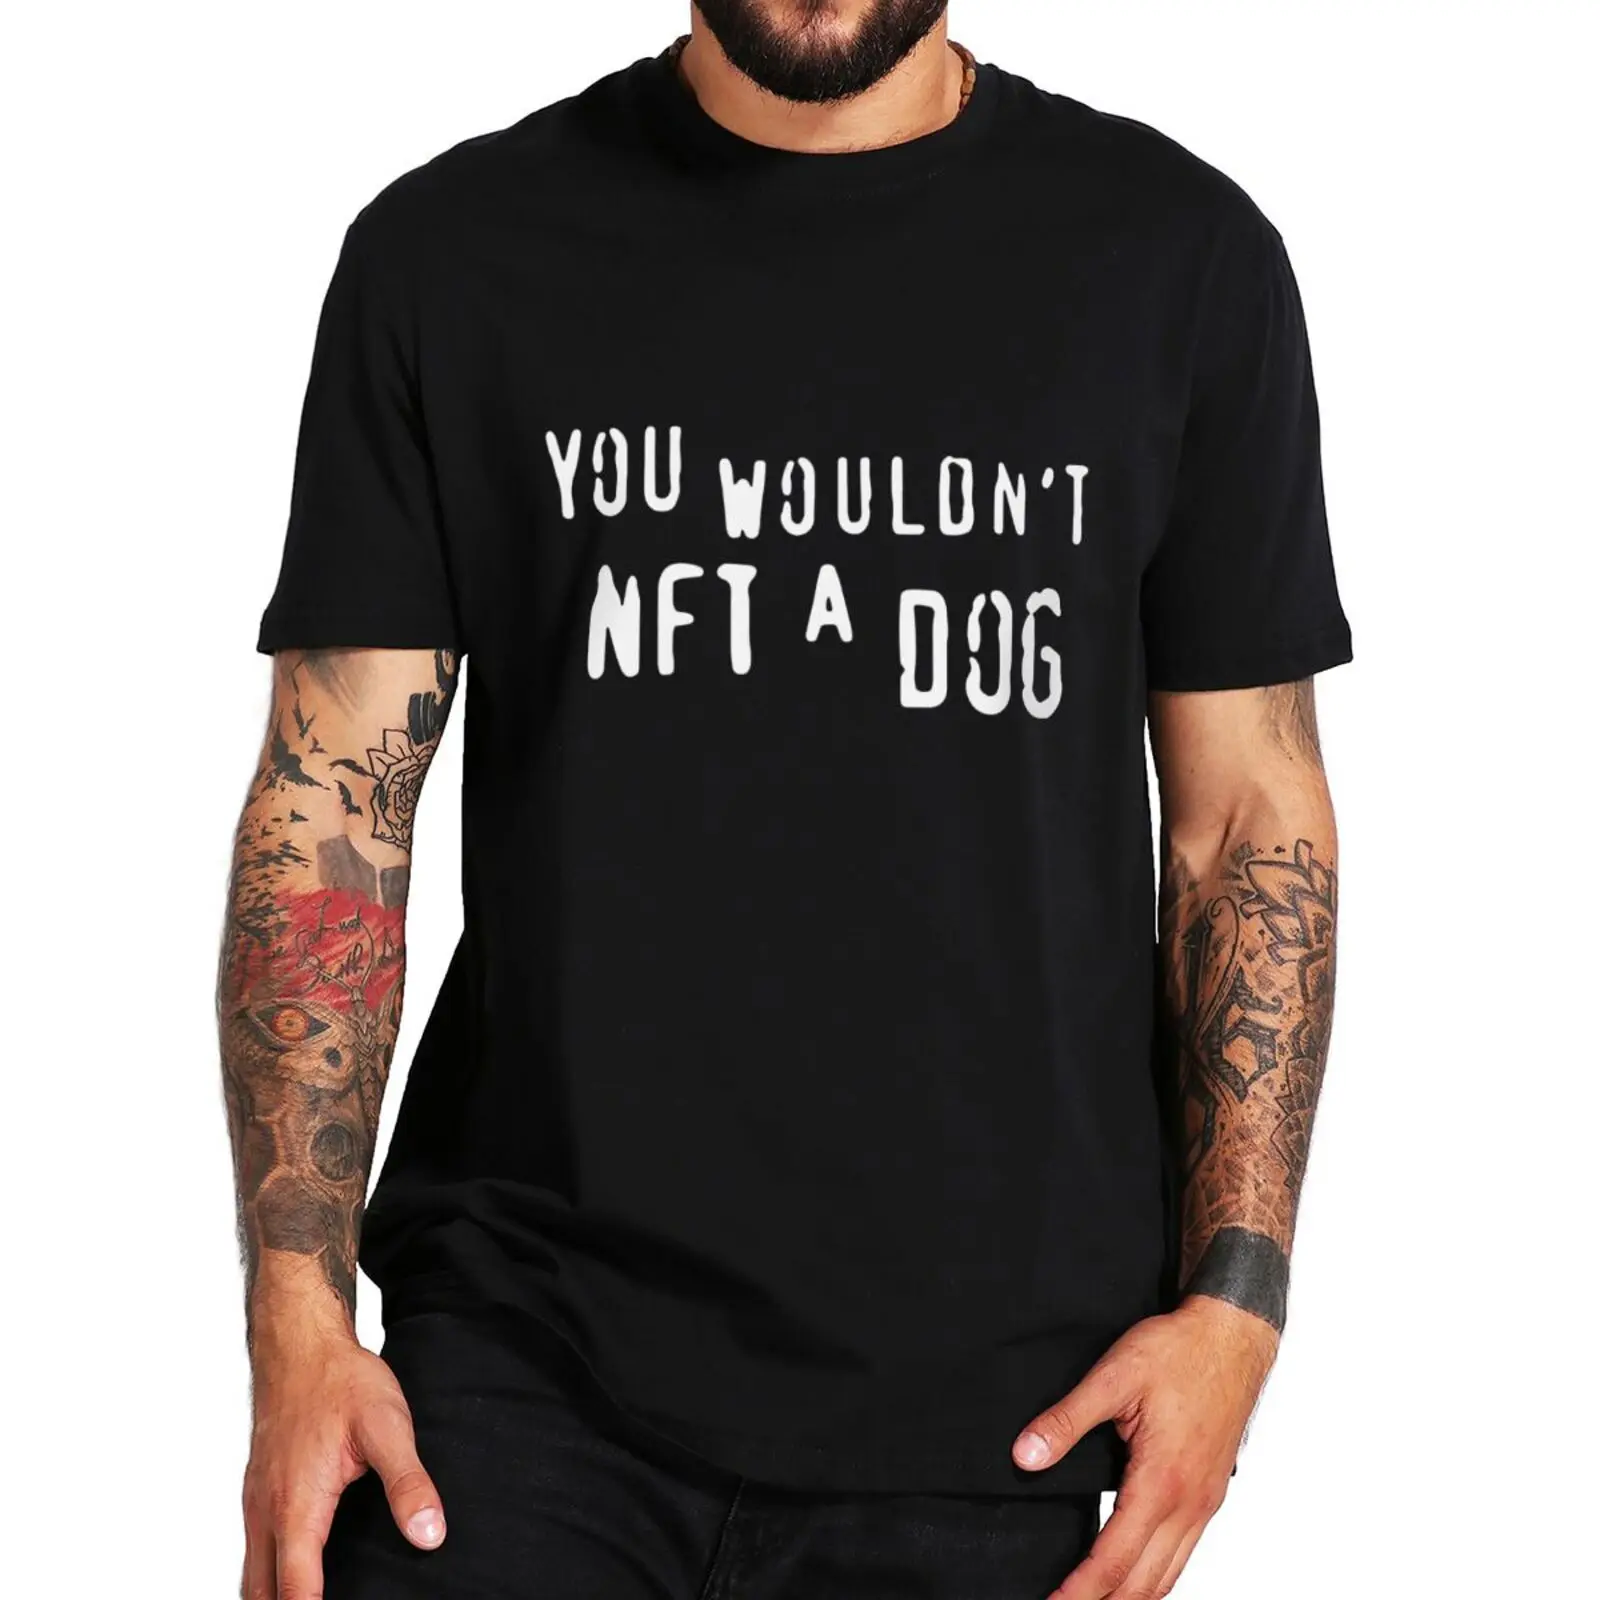 

You Wouldn't NftA Dog T-shirt 2022 Funny Meme Humor Men Clothing Comfortable Casual Unisex Cotton T Shirts EU Size